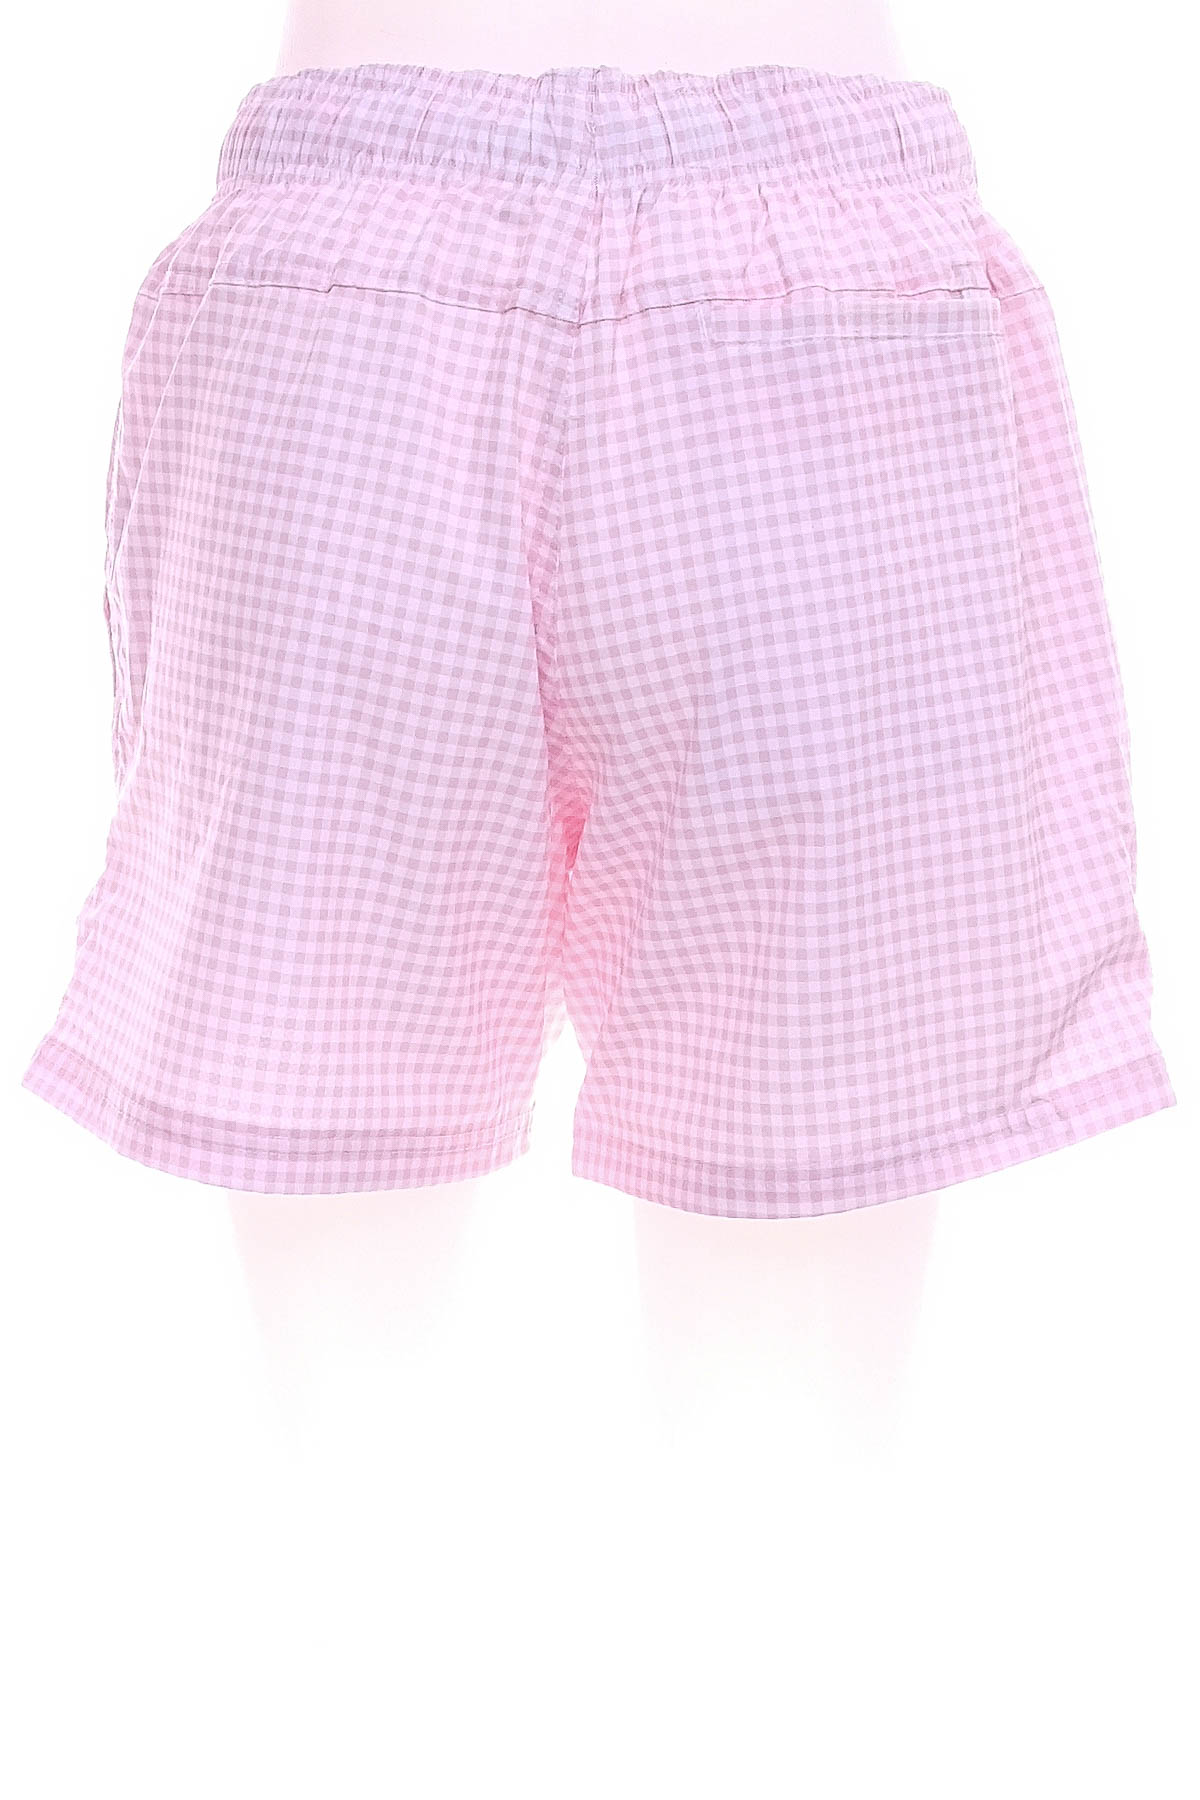 Men's shorts - Cotton On Garments - 1